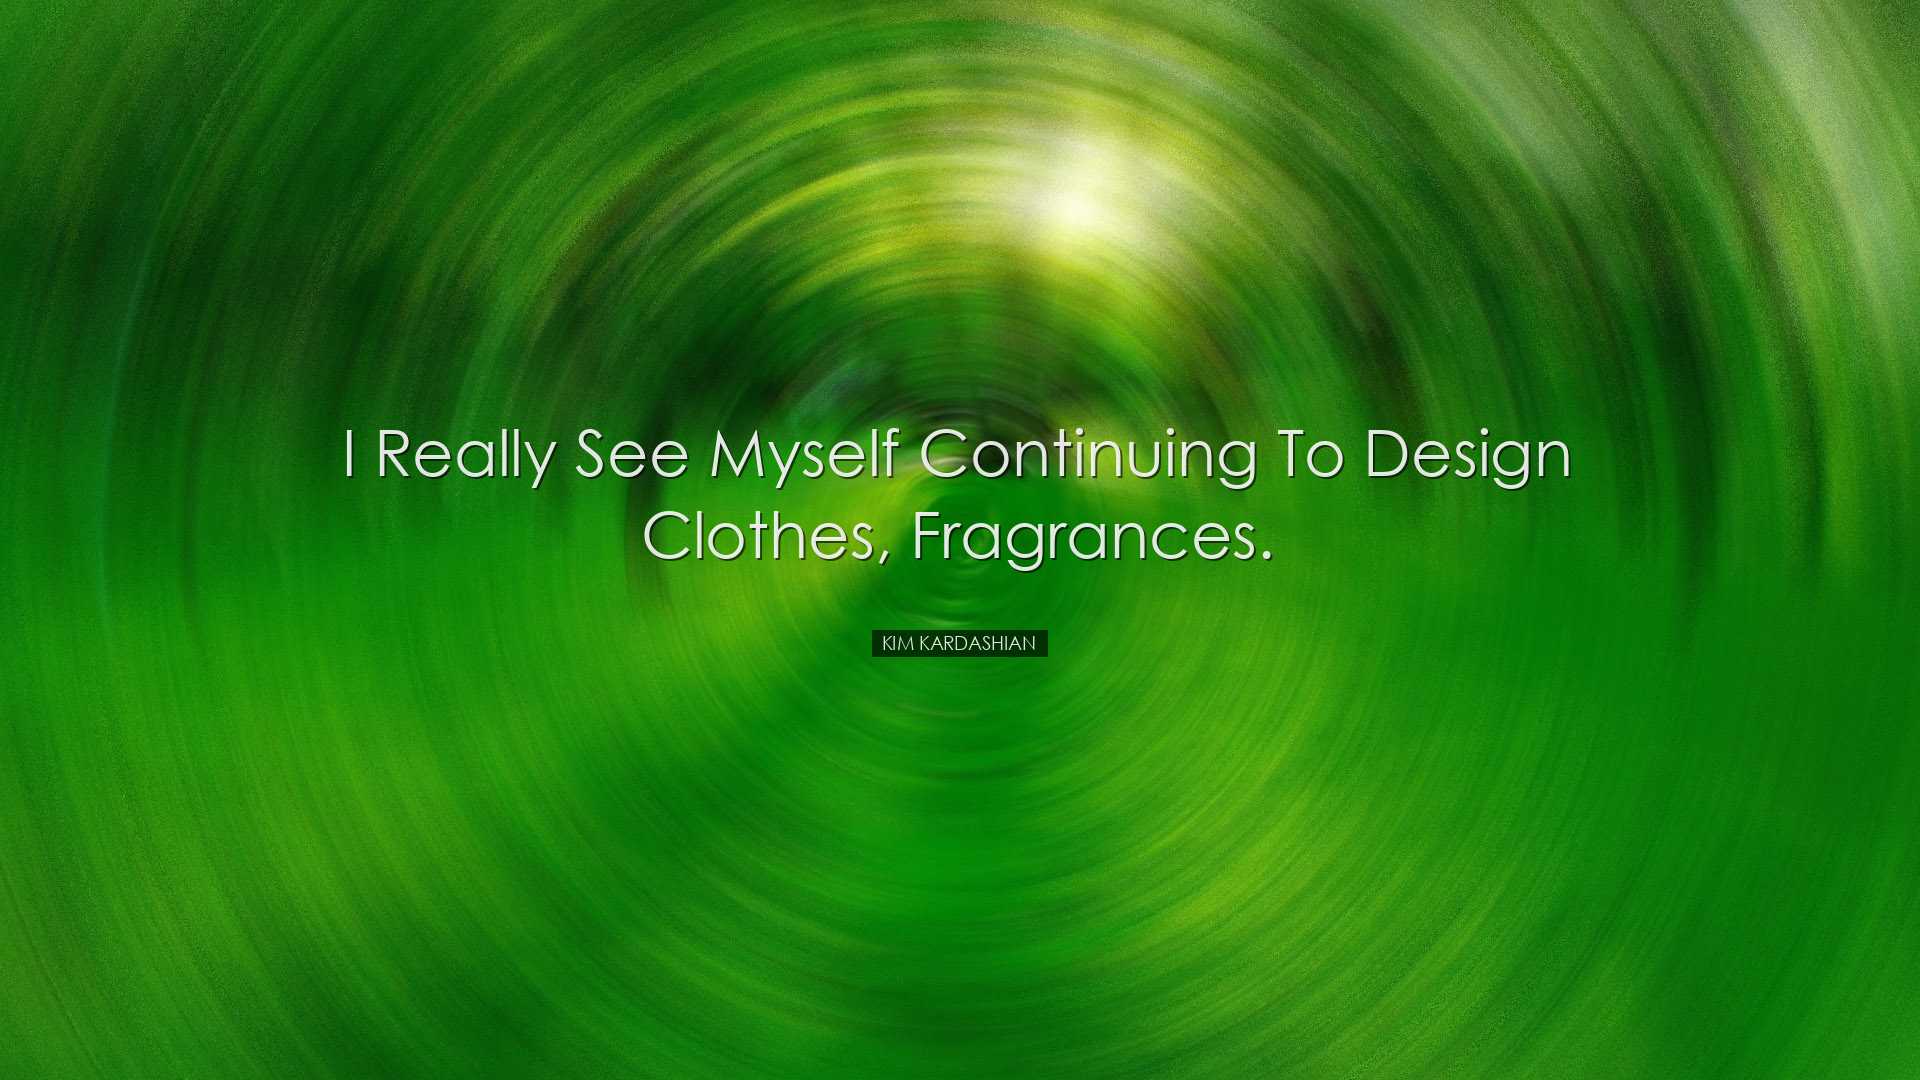 I really see myself continuing to design clothes, fragrances. - Ki